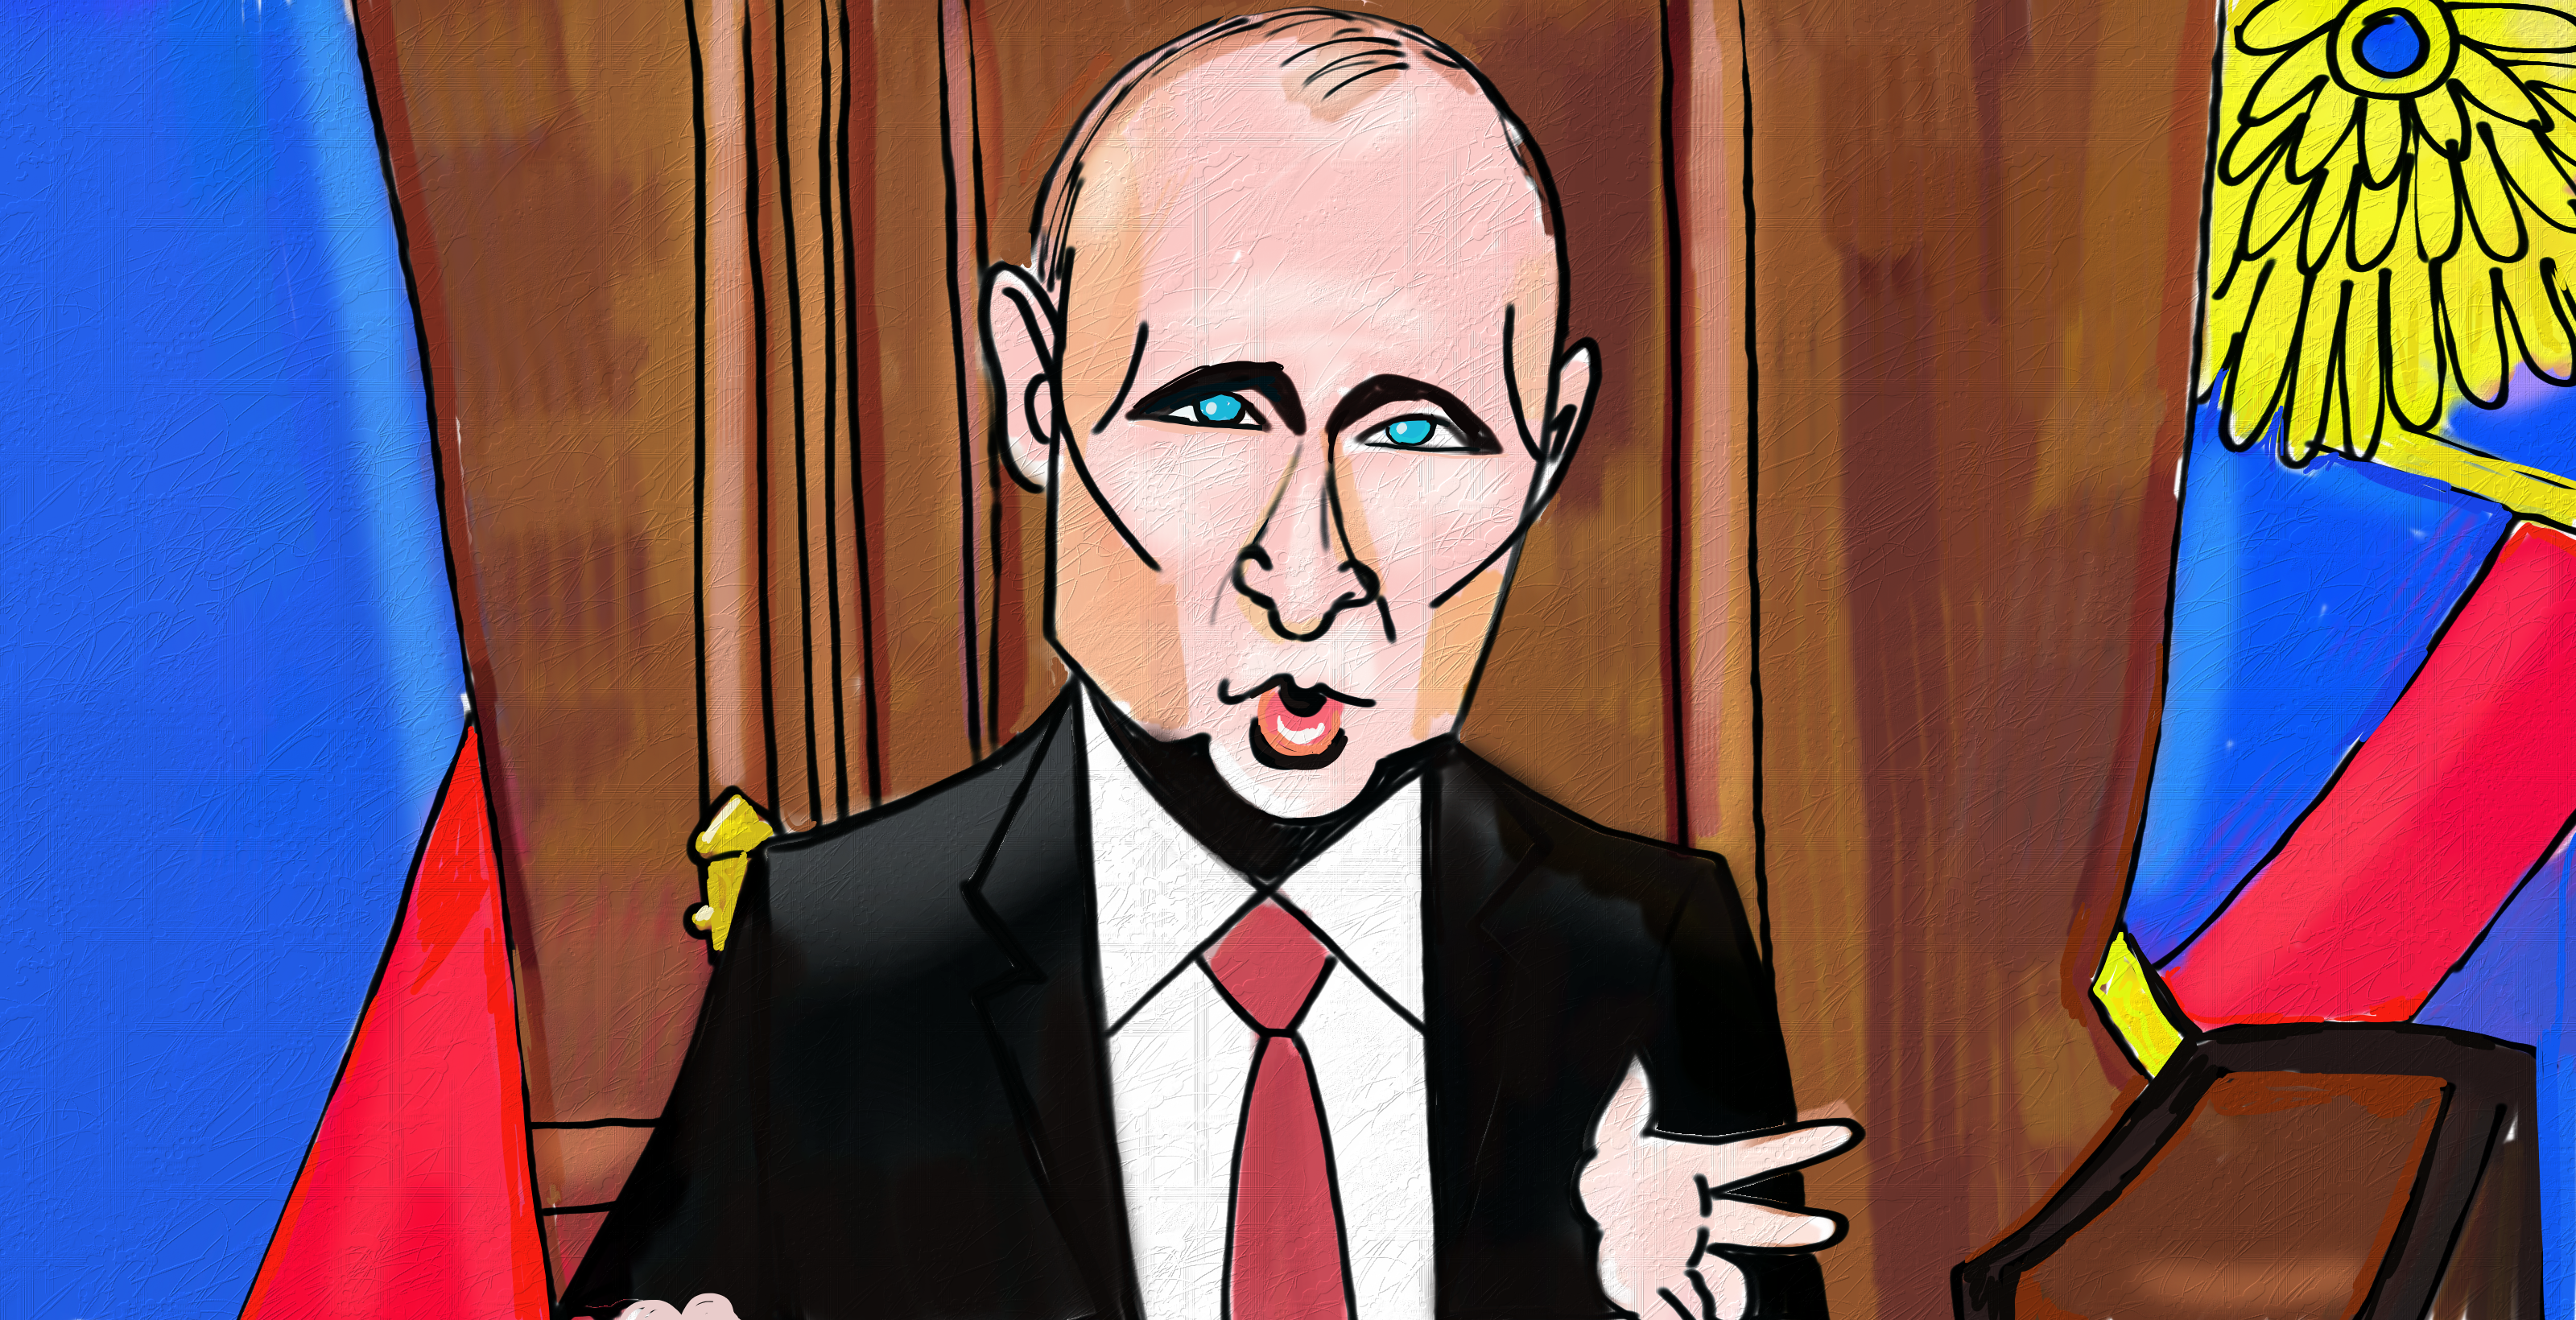 Vladimir Putin portrait political cartoon post thumbnail image